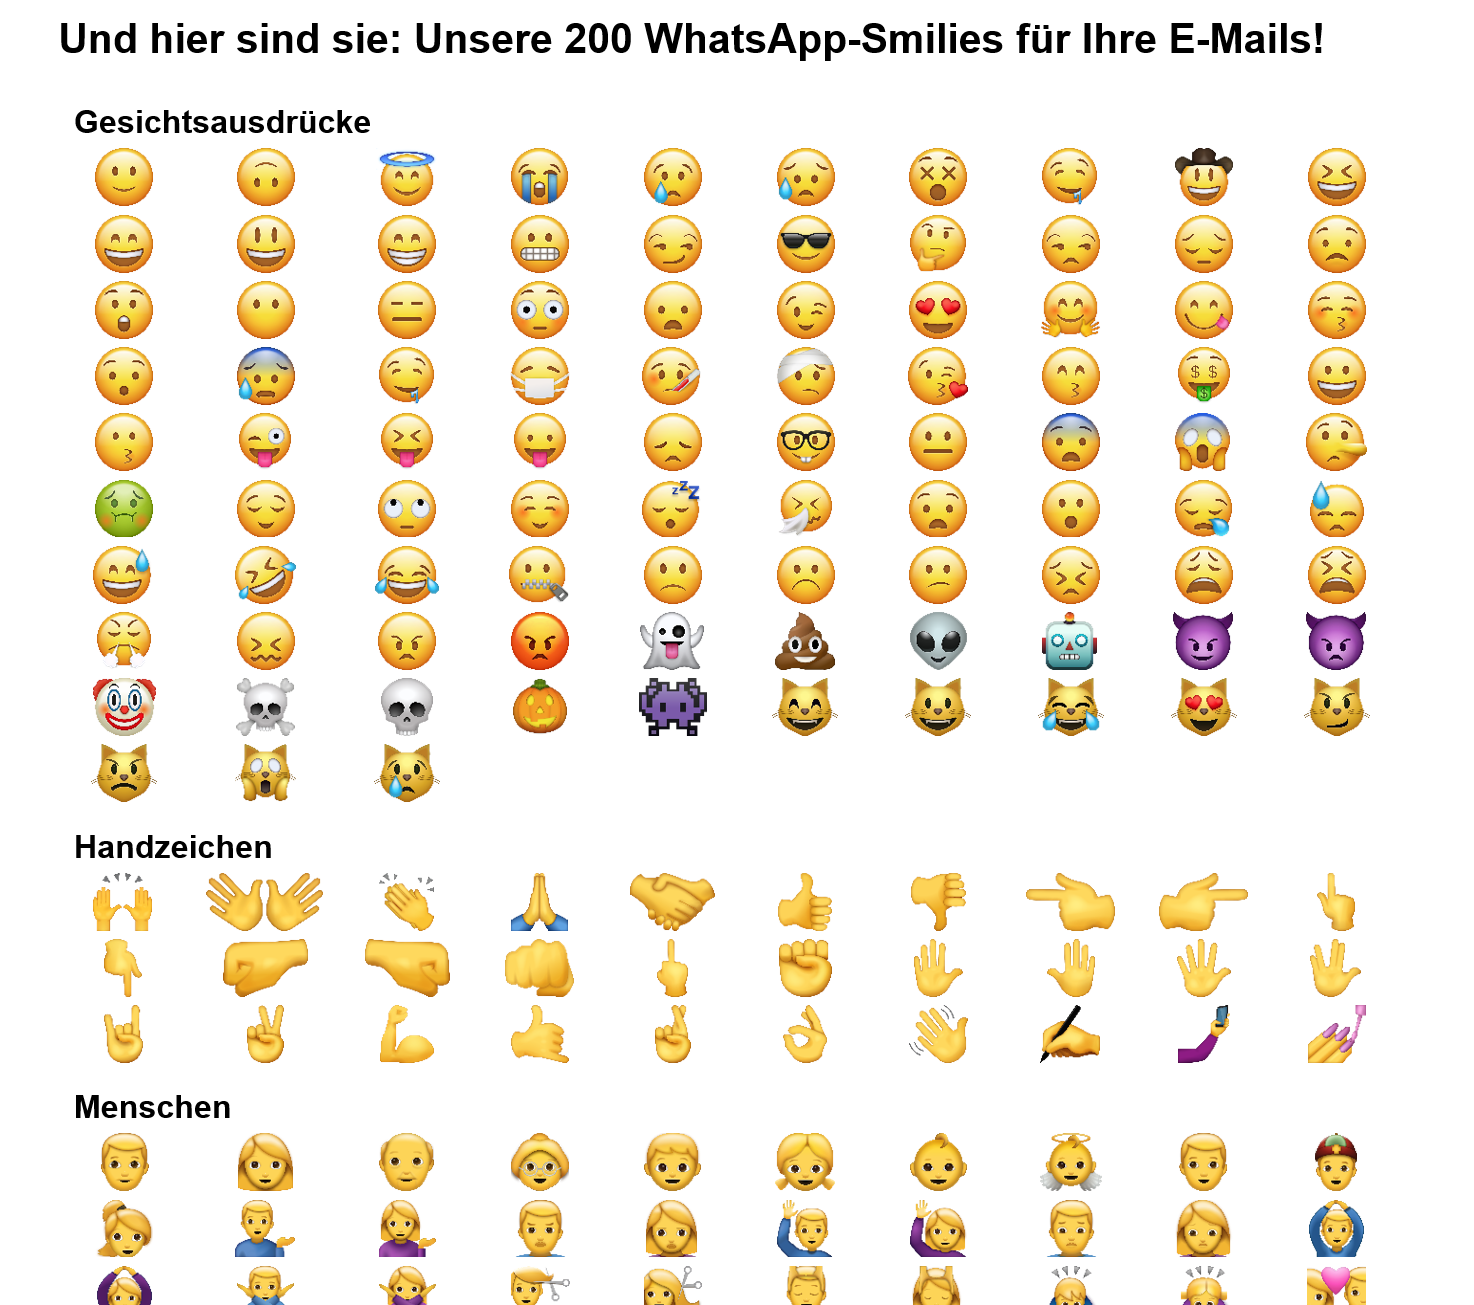 Whatsapp smileys bedeutung liste deutsch